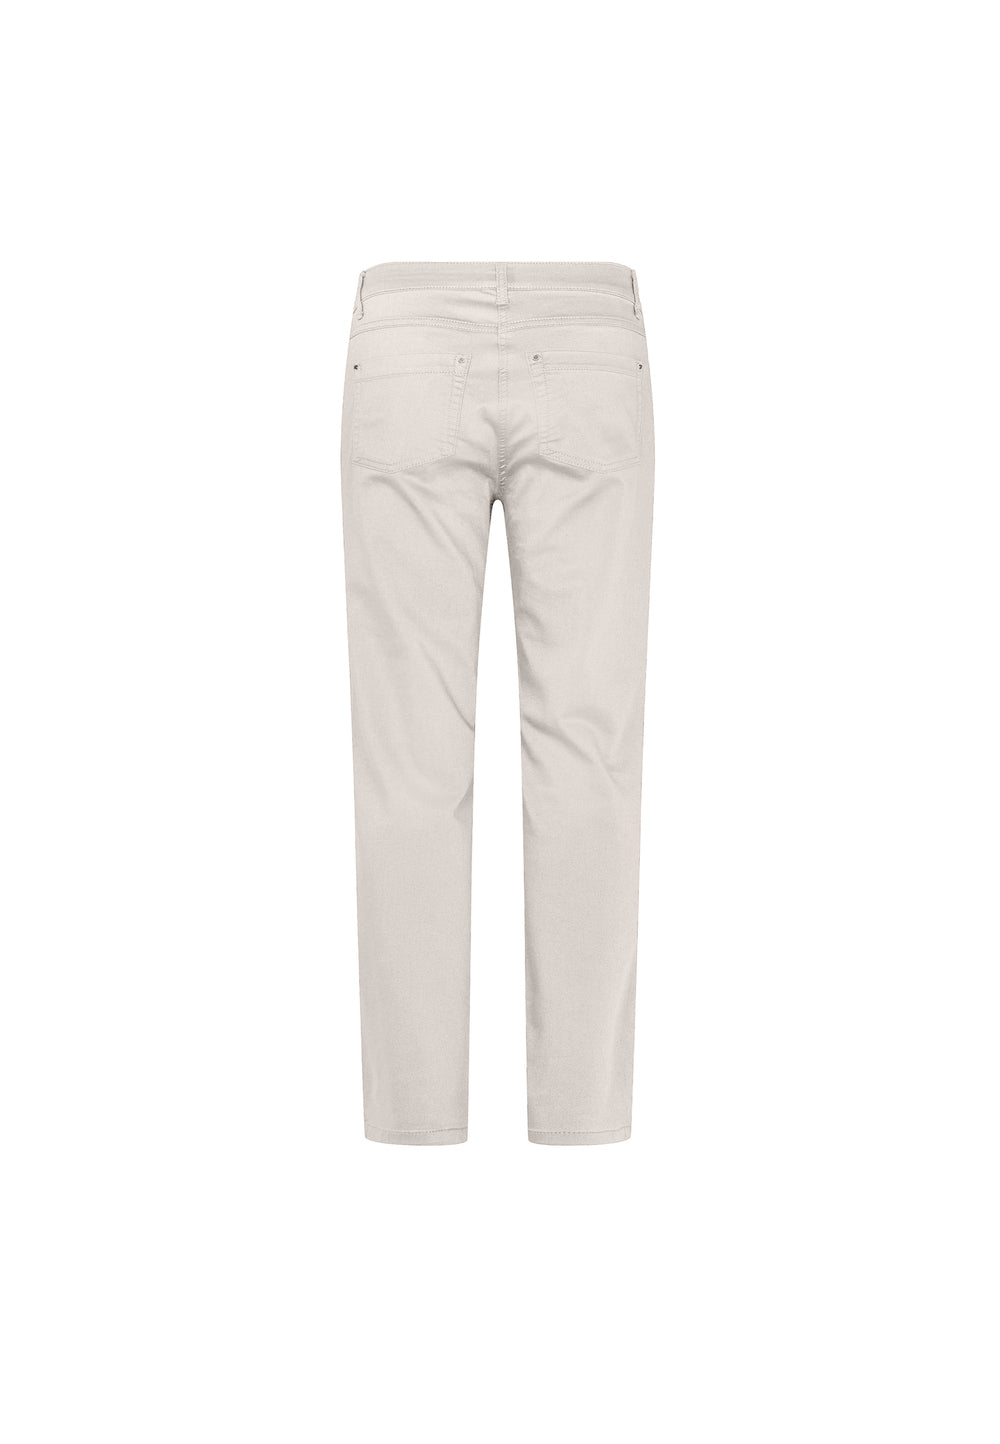 LAURIE Charlotte Regular - Medium Length Trousers REGULAR 25000 Grey Sand